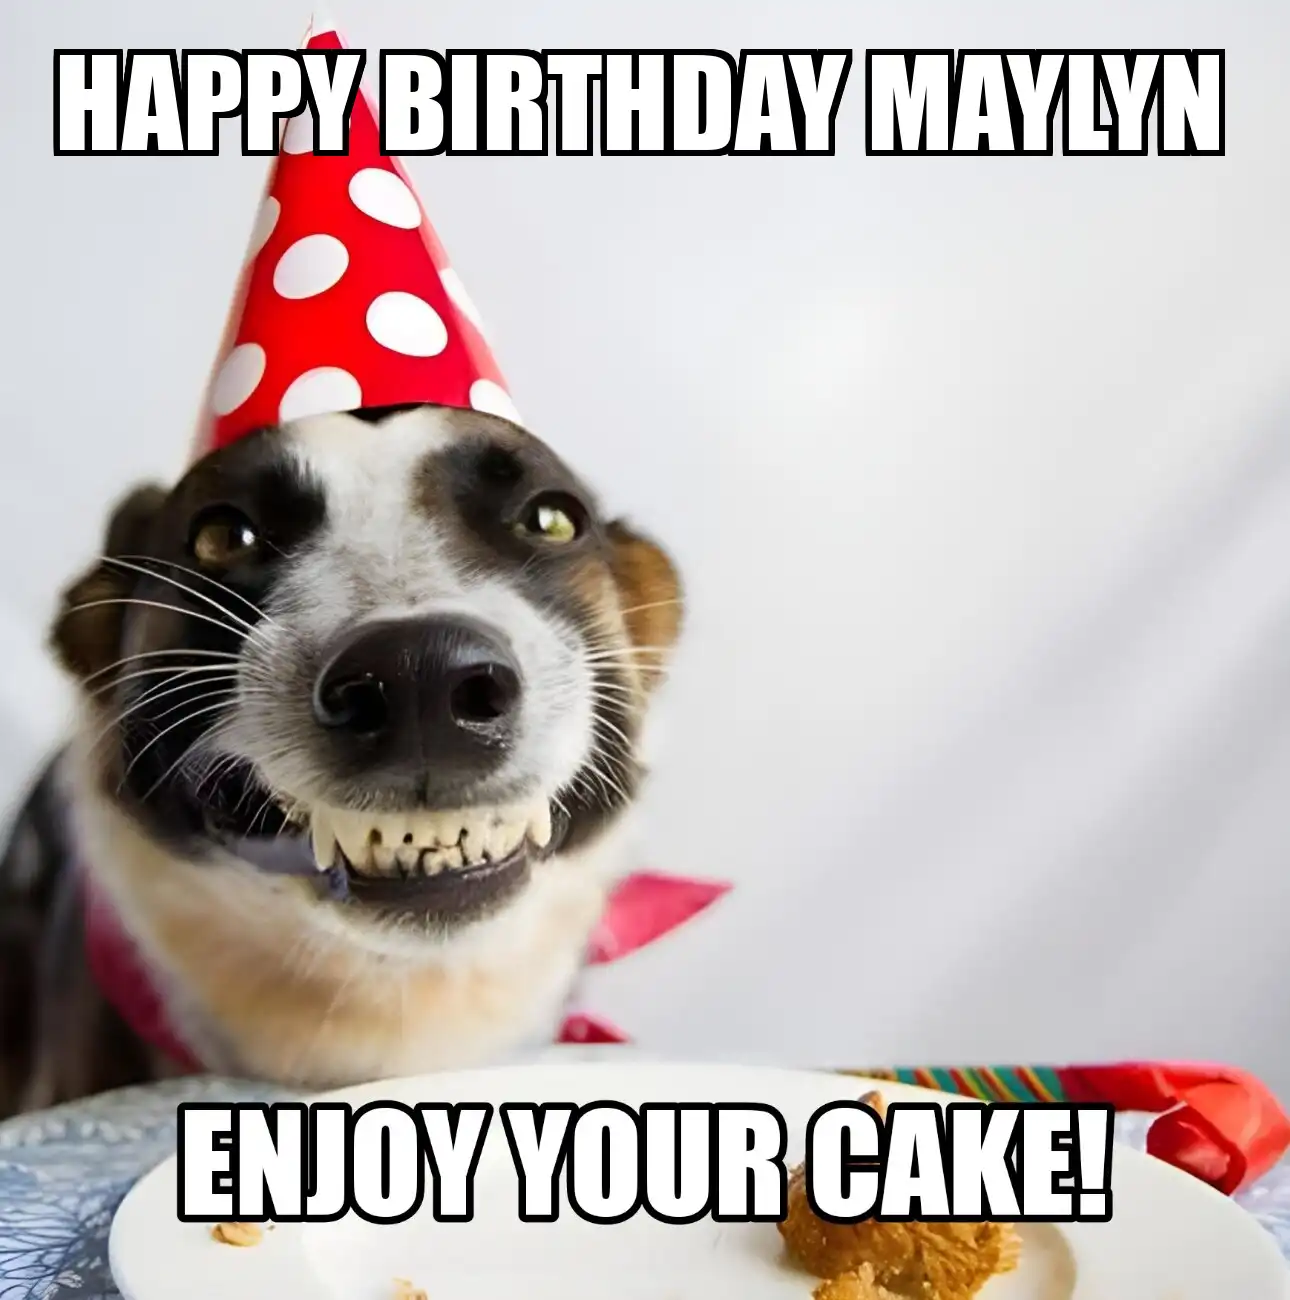 Happy Birthday Maylyn Enjoy Your Cake Dog Meme